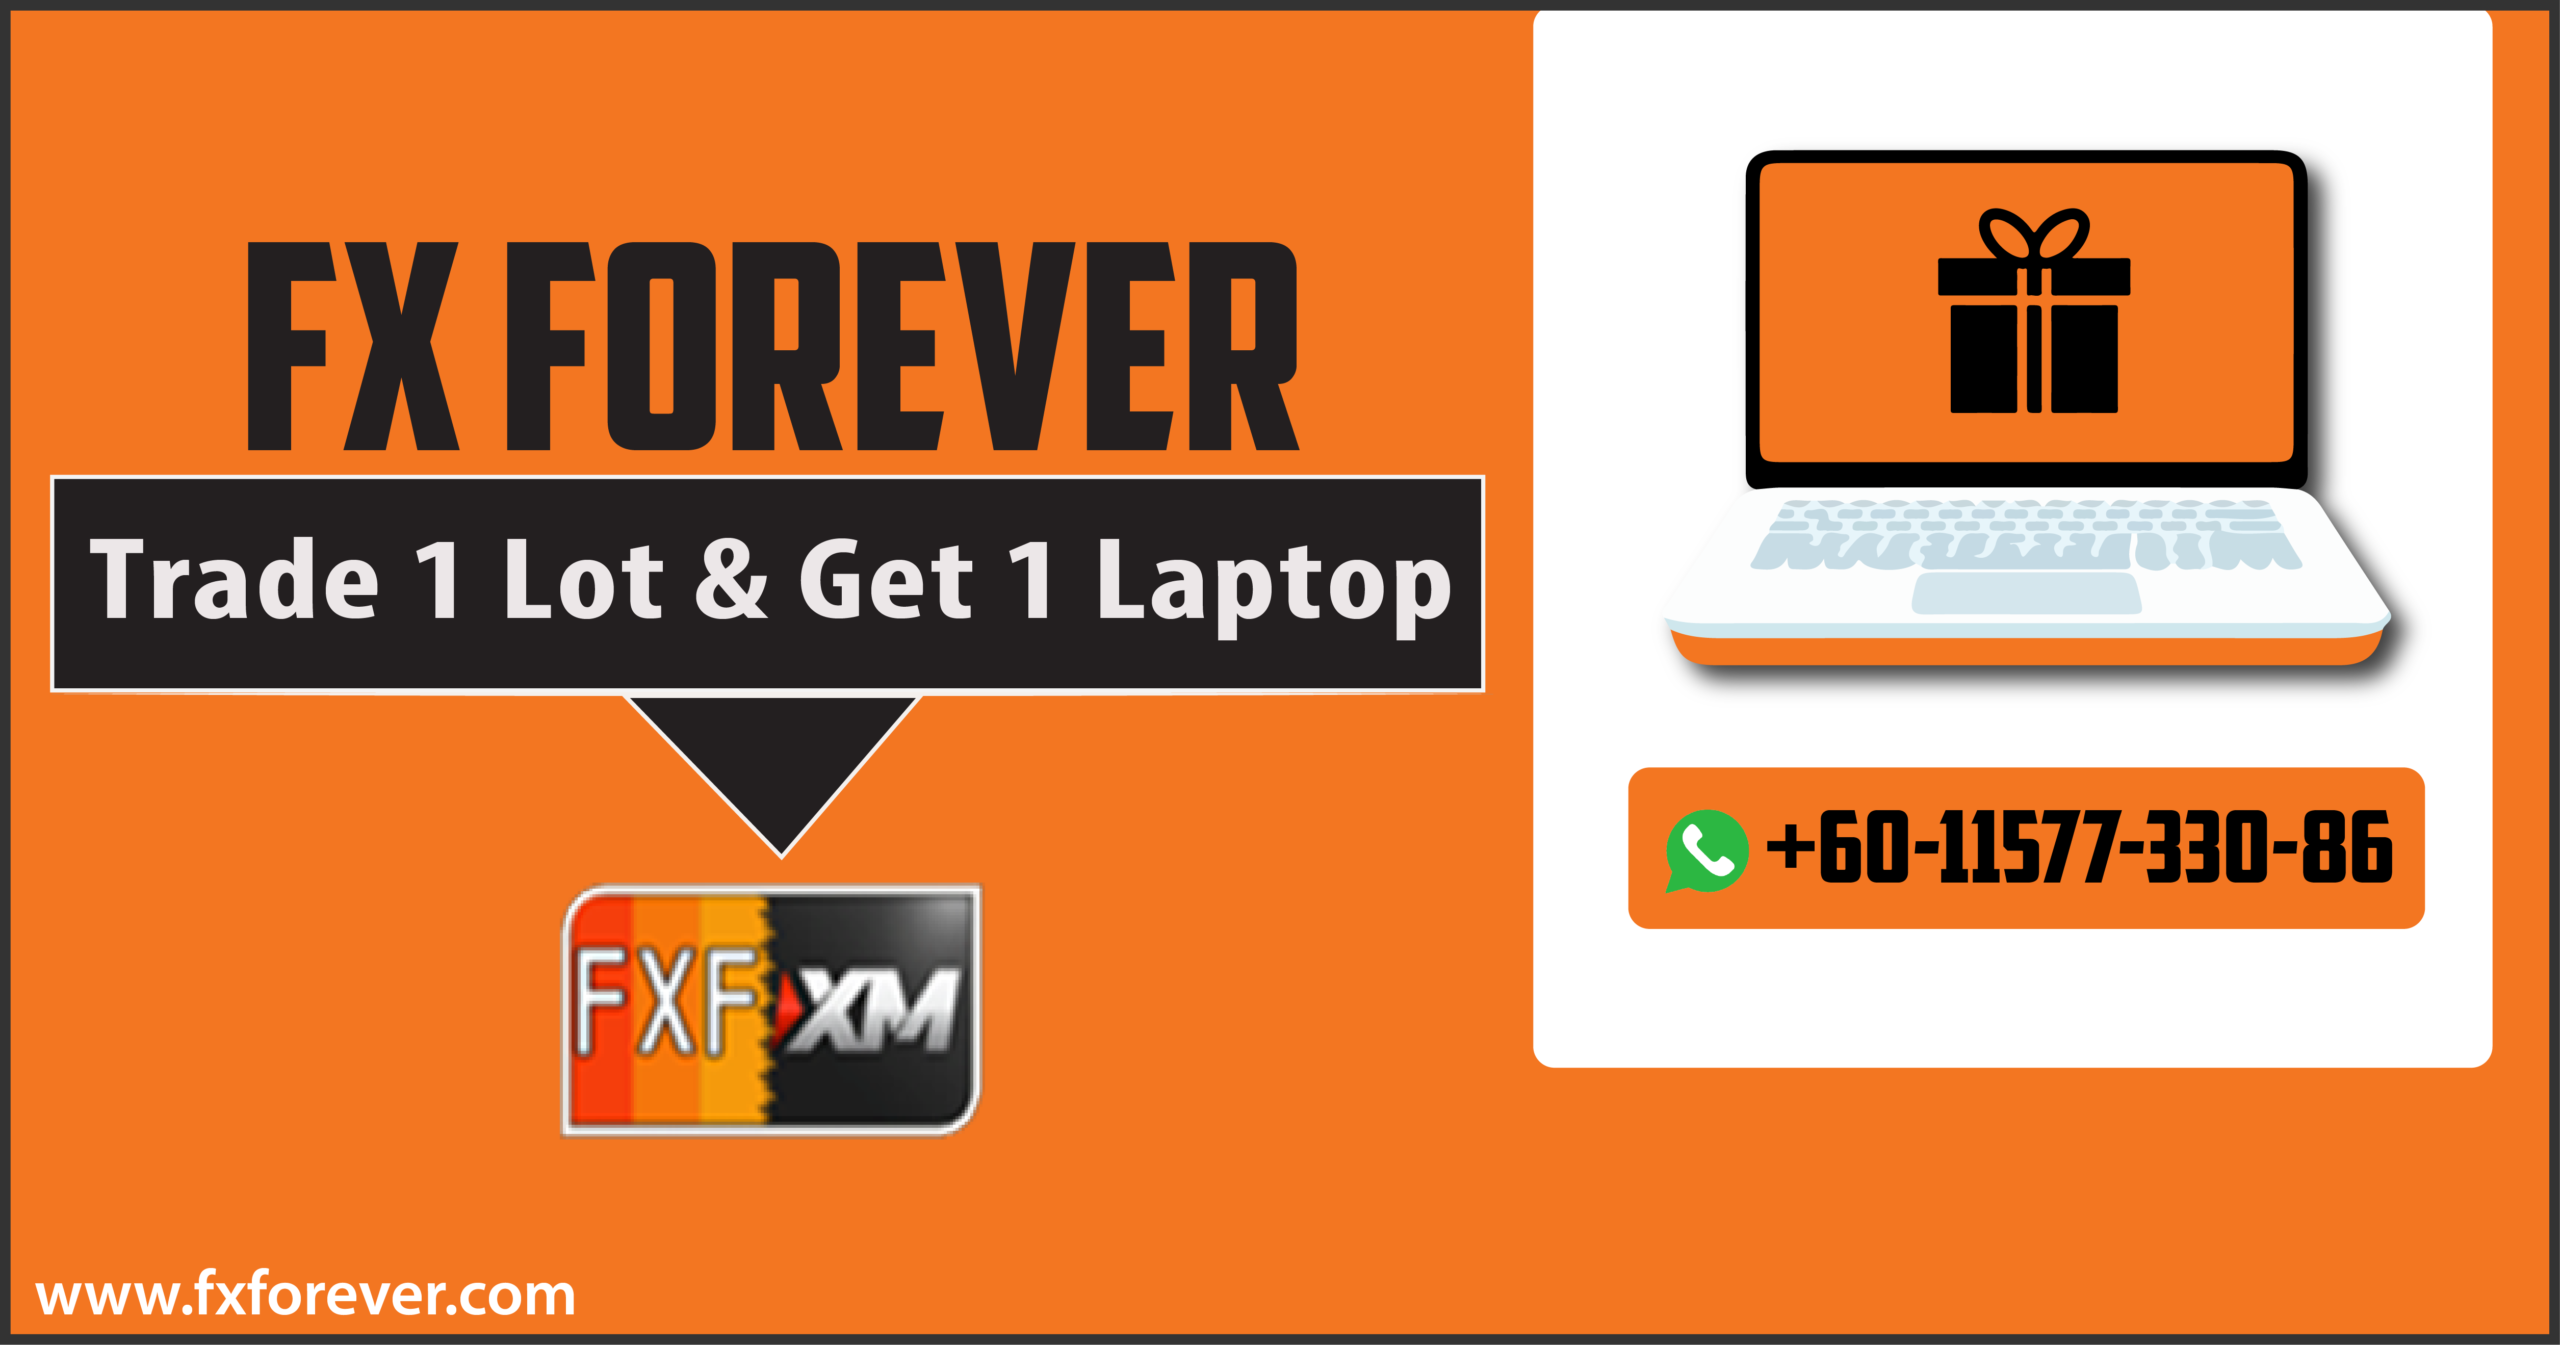 fxforever-laptop-promotion